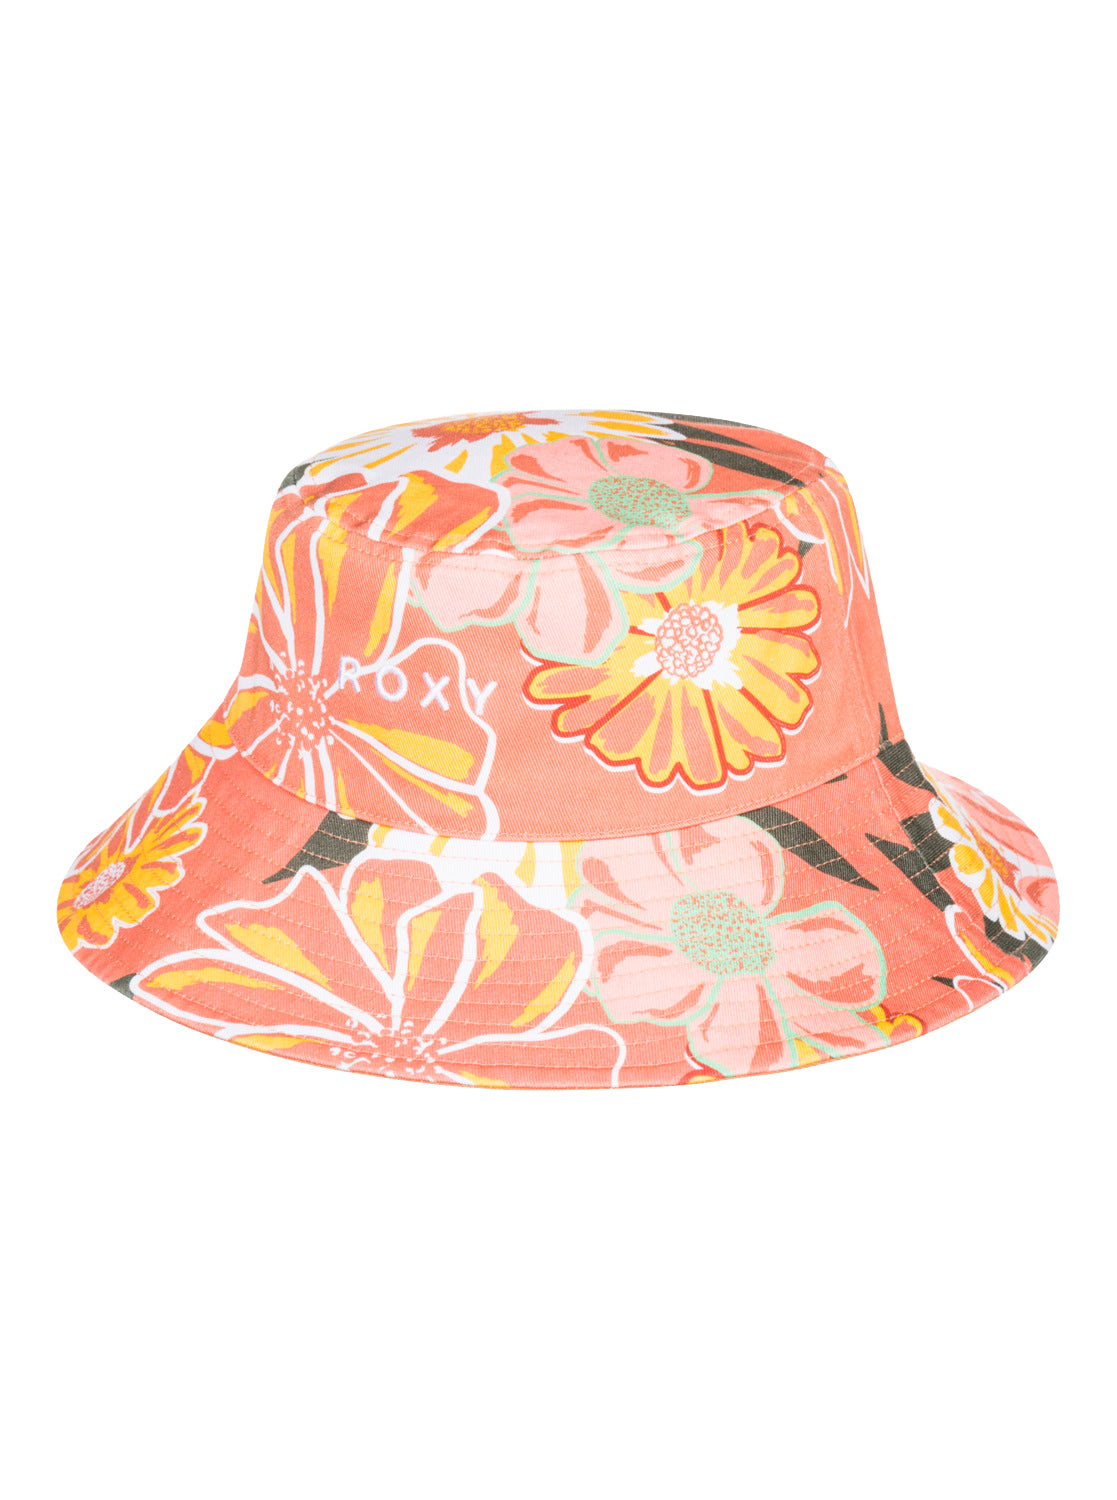 Roxy Aloha Sunshine Printed Bucket Hat